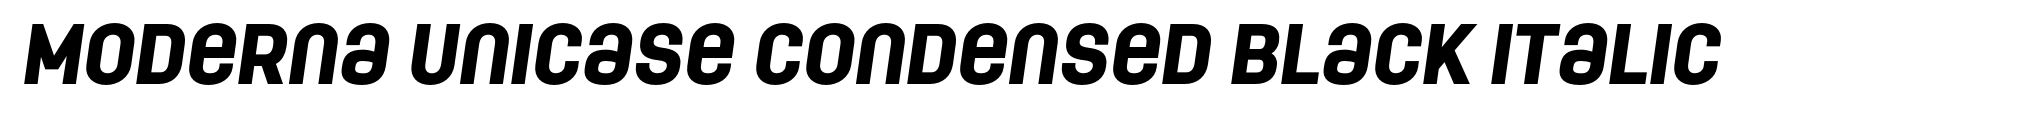 Moderna Unicase Condensed Black Italic image